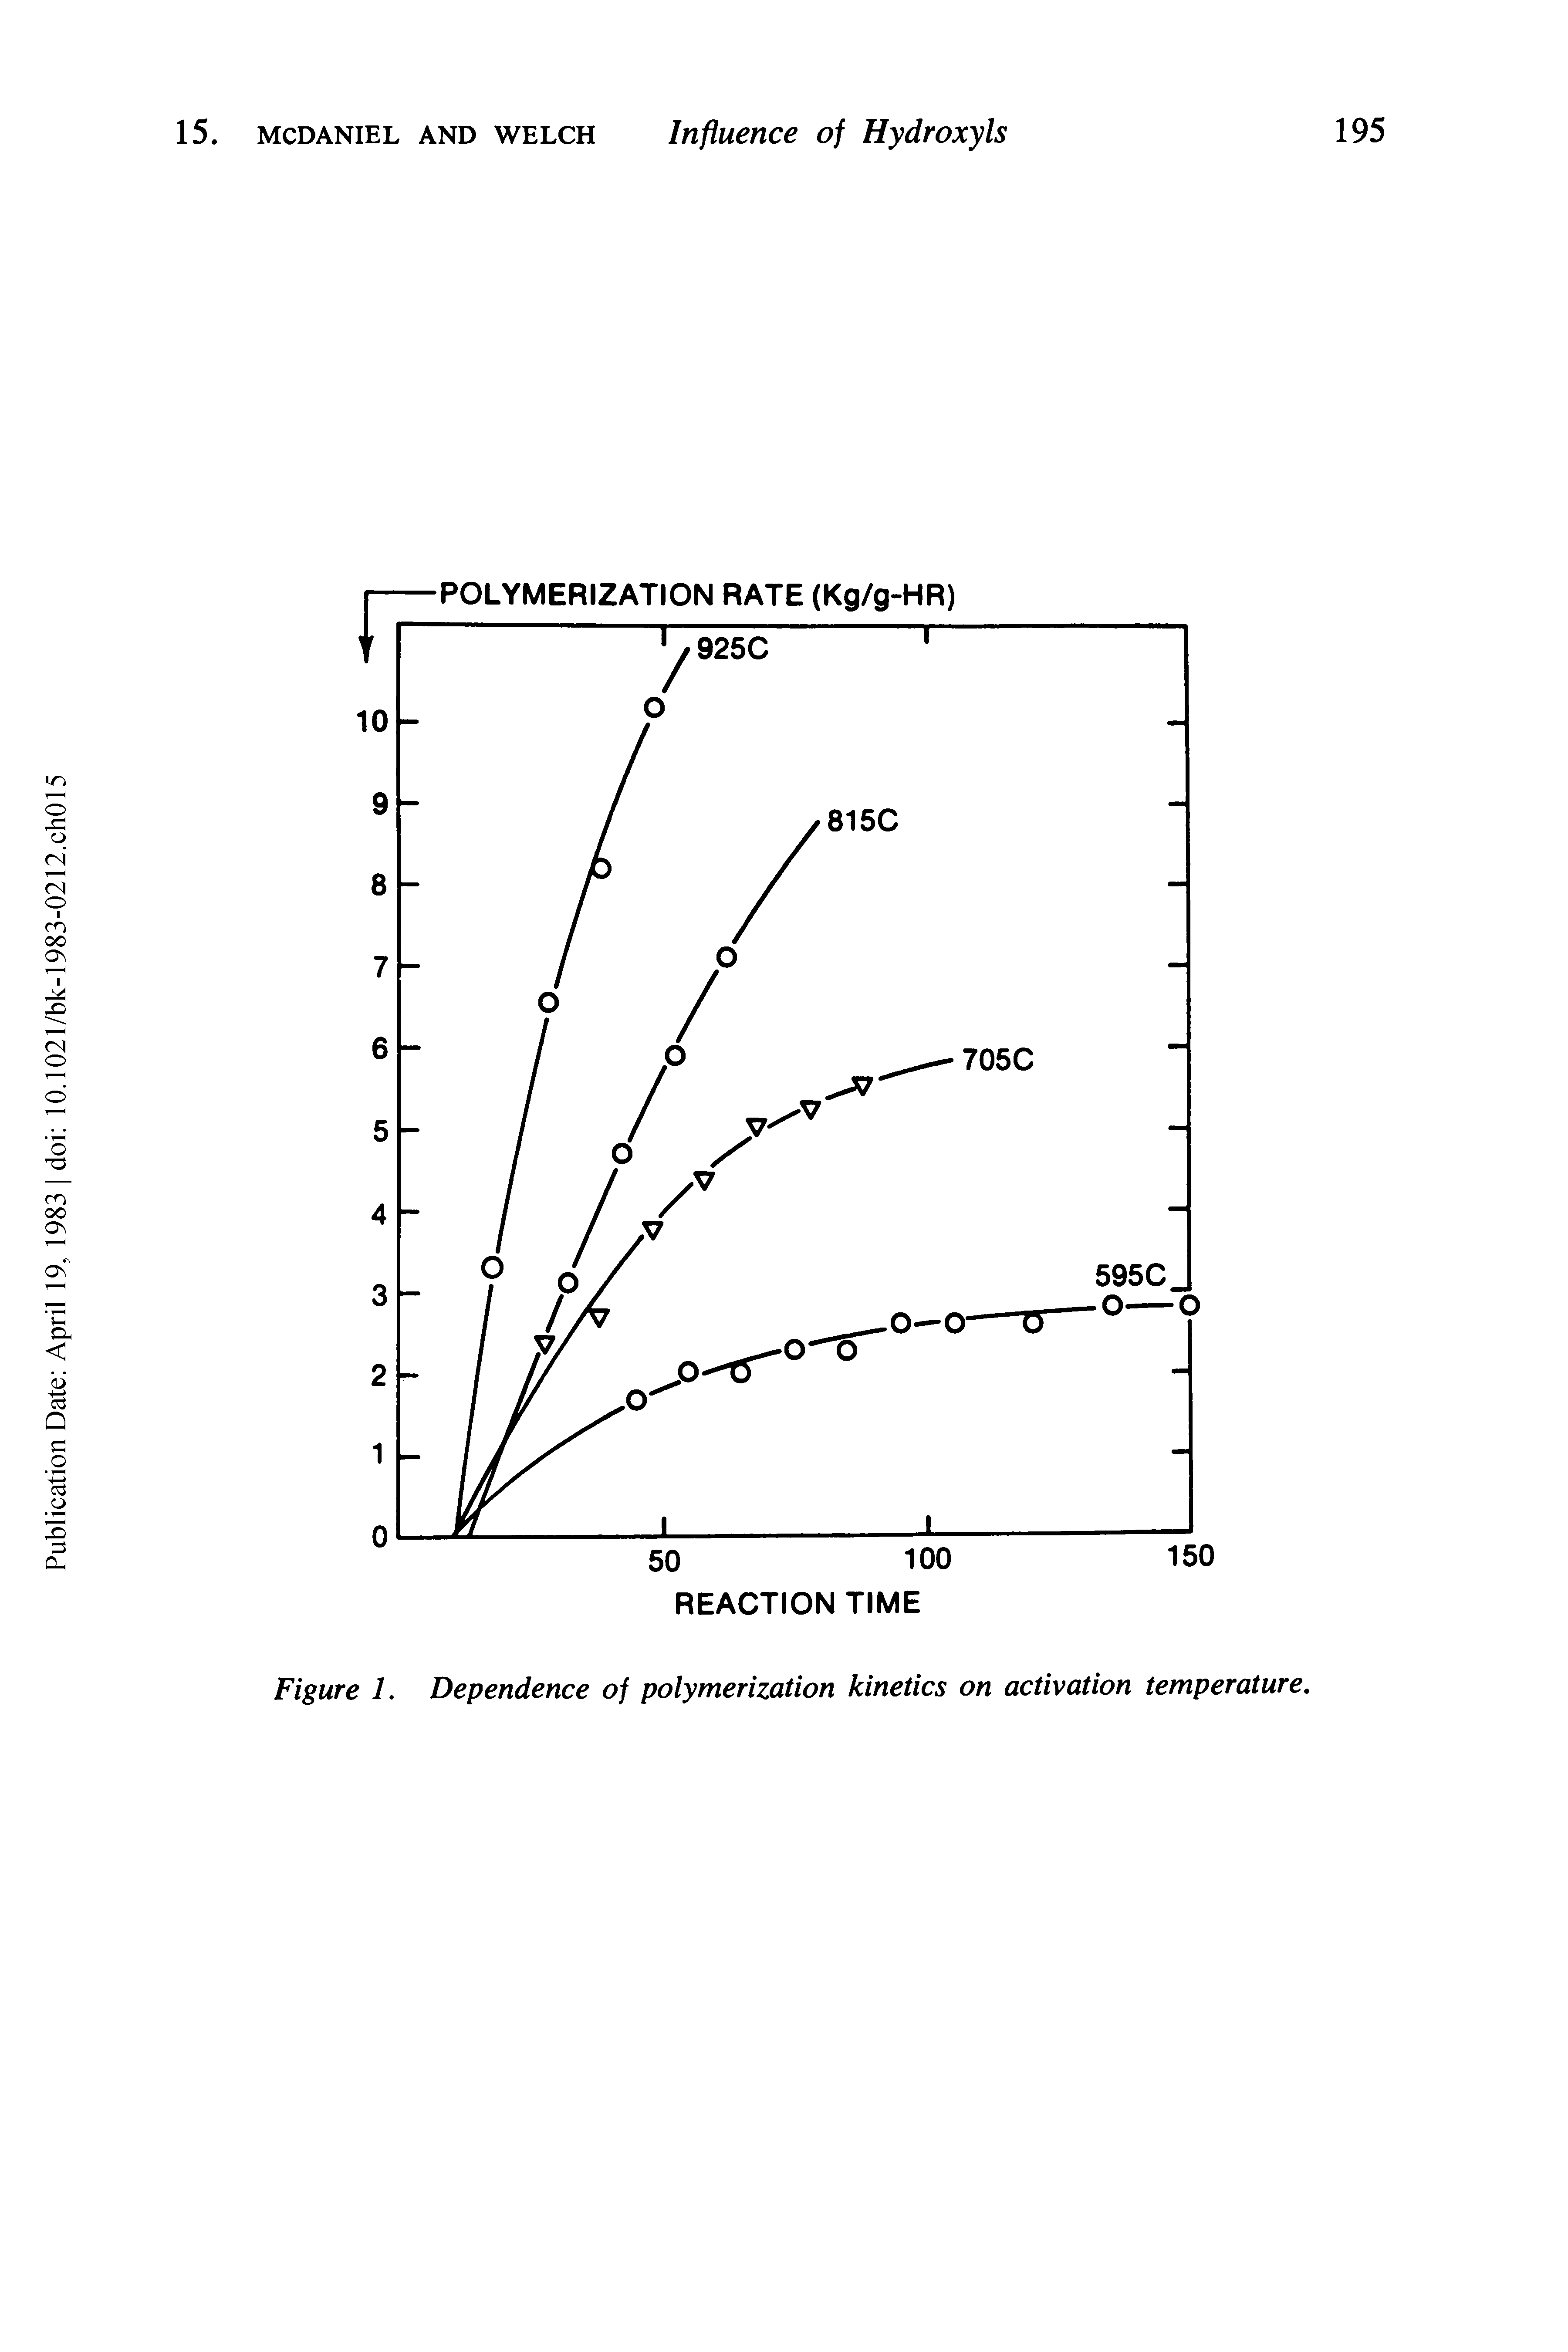 Figure 1. Dependence of polymerization kinetics on activation temperature.